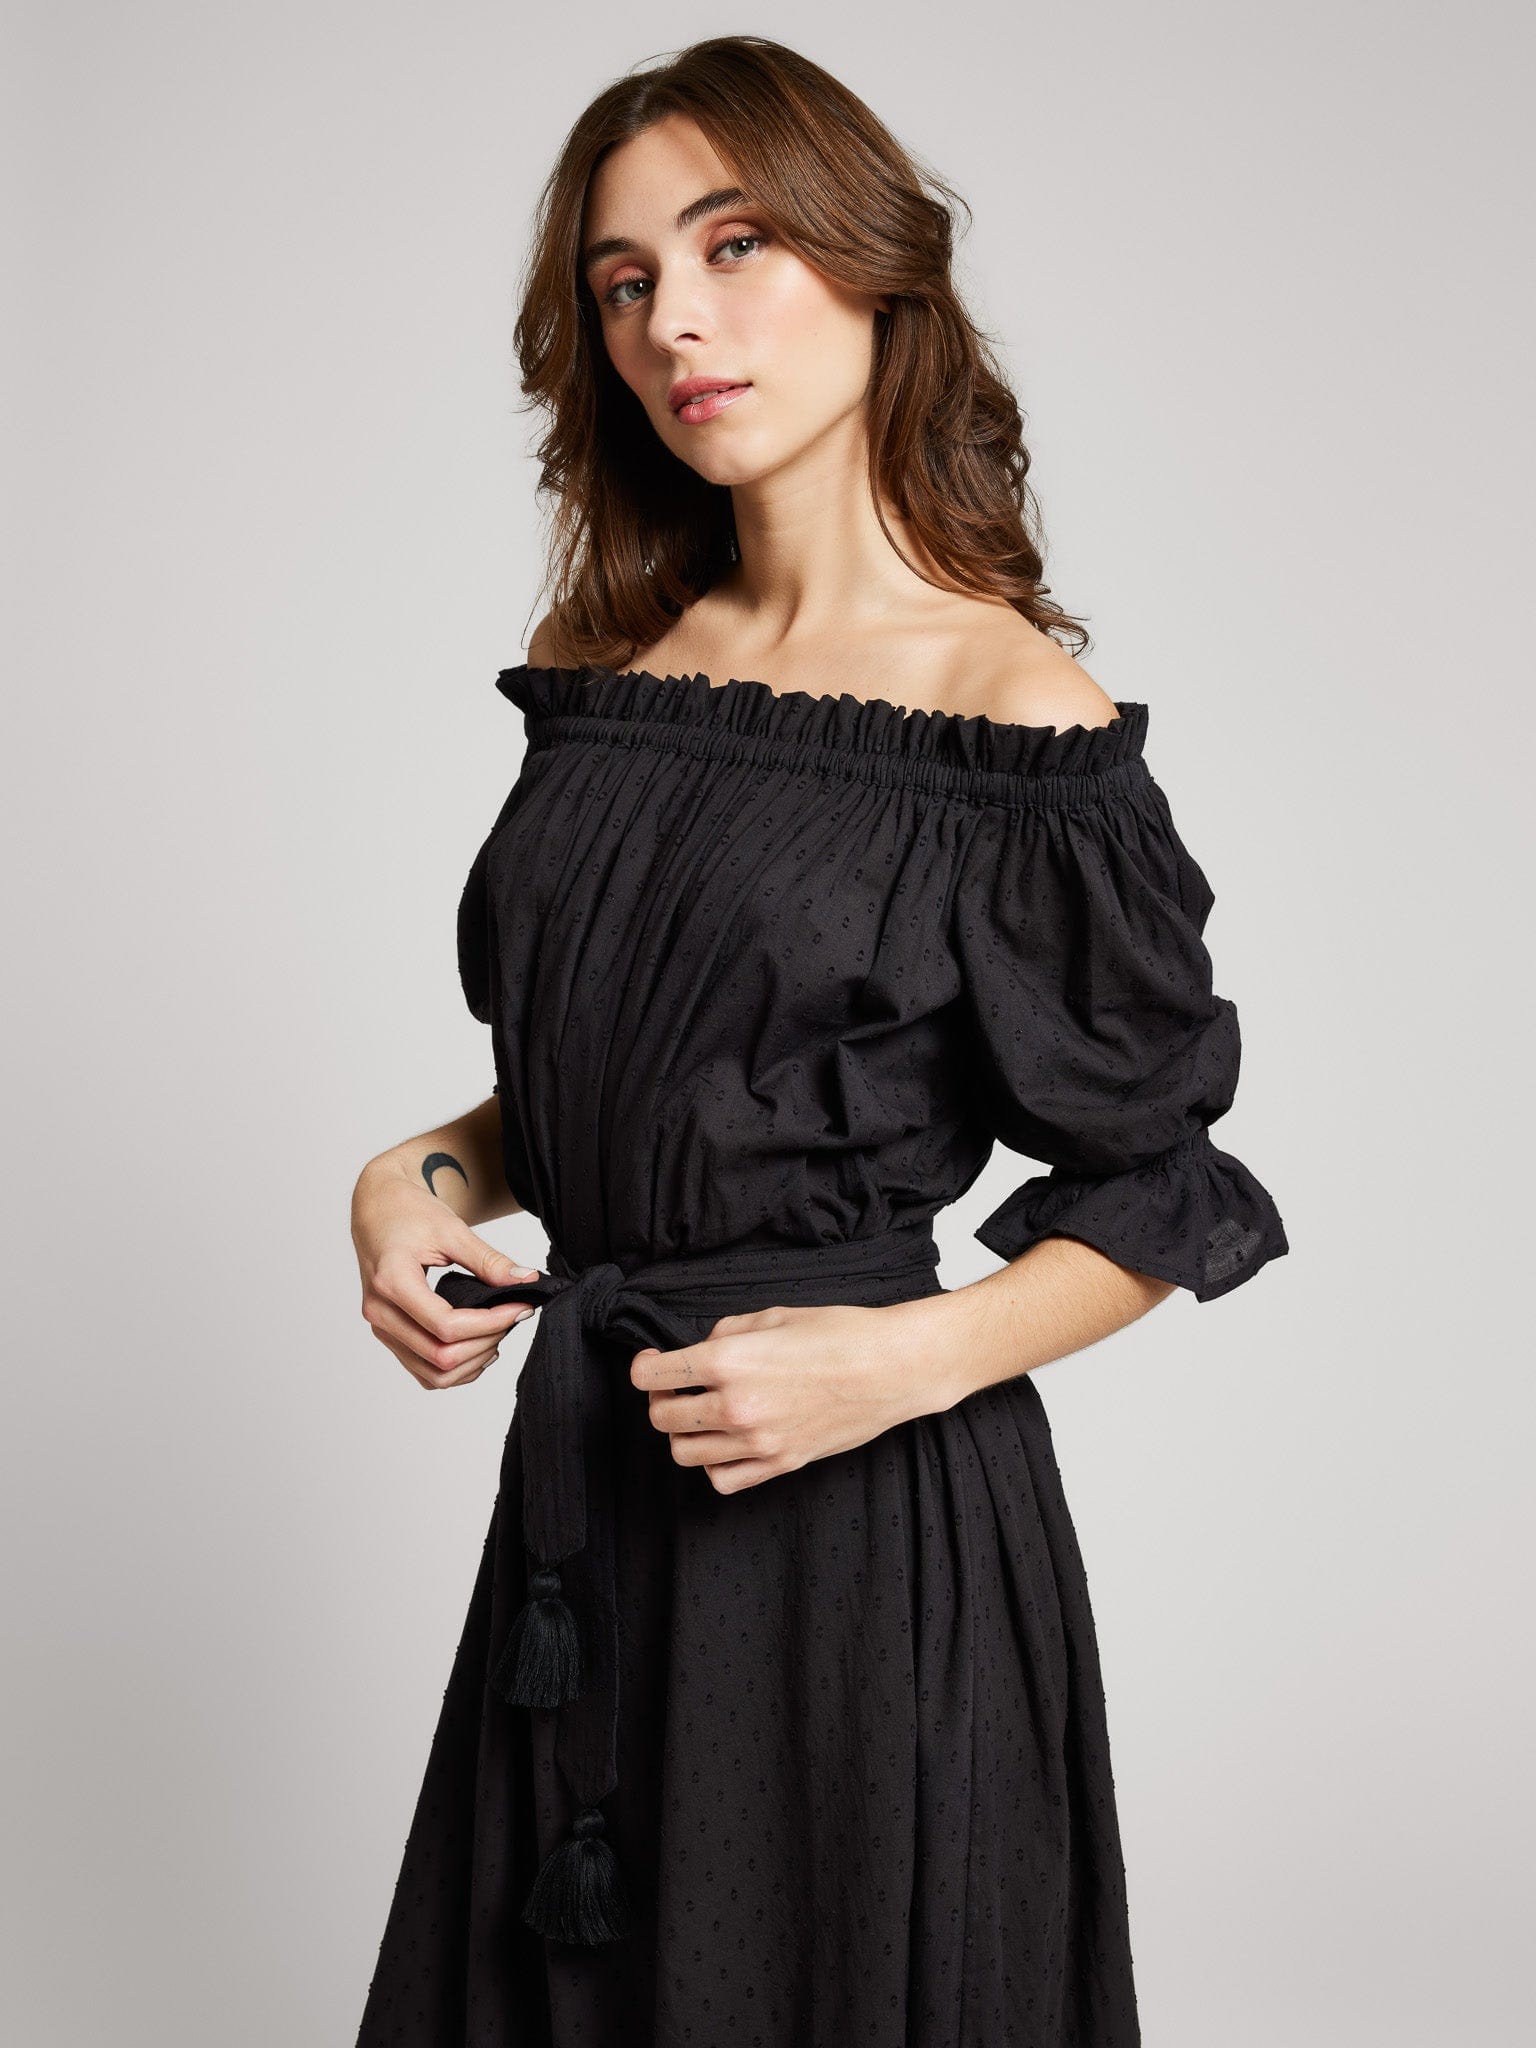 MILLE Clothing Paloma Dress in Black Swiss Dot